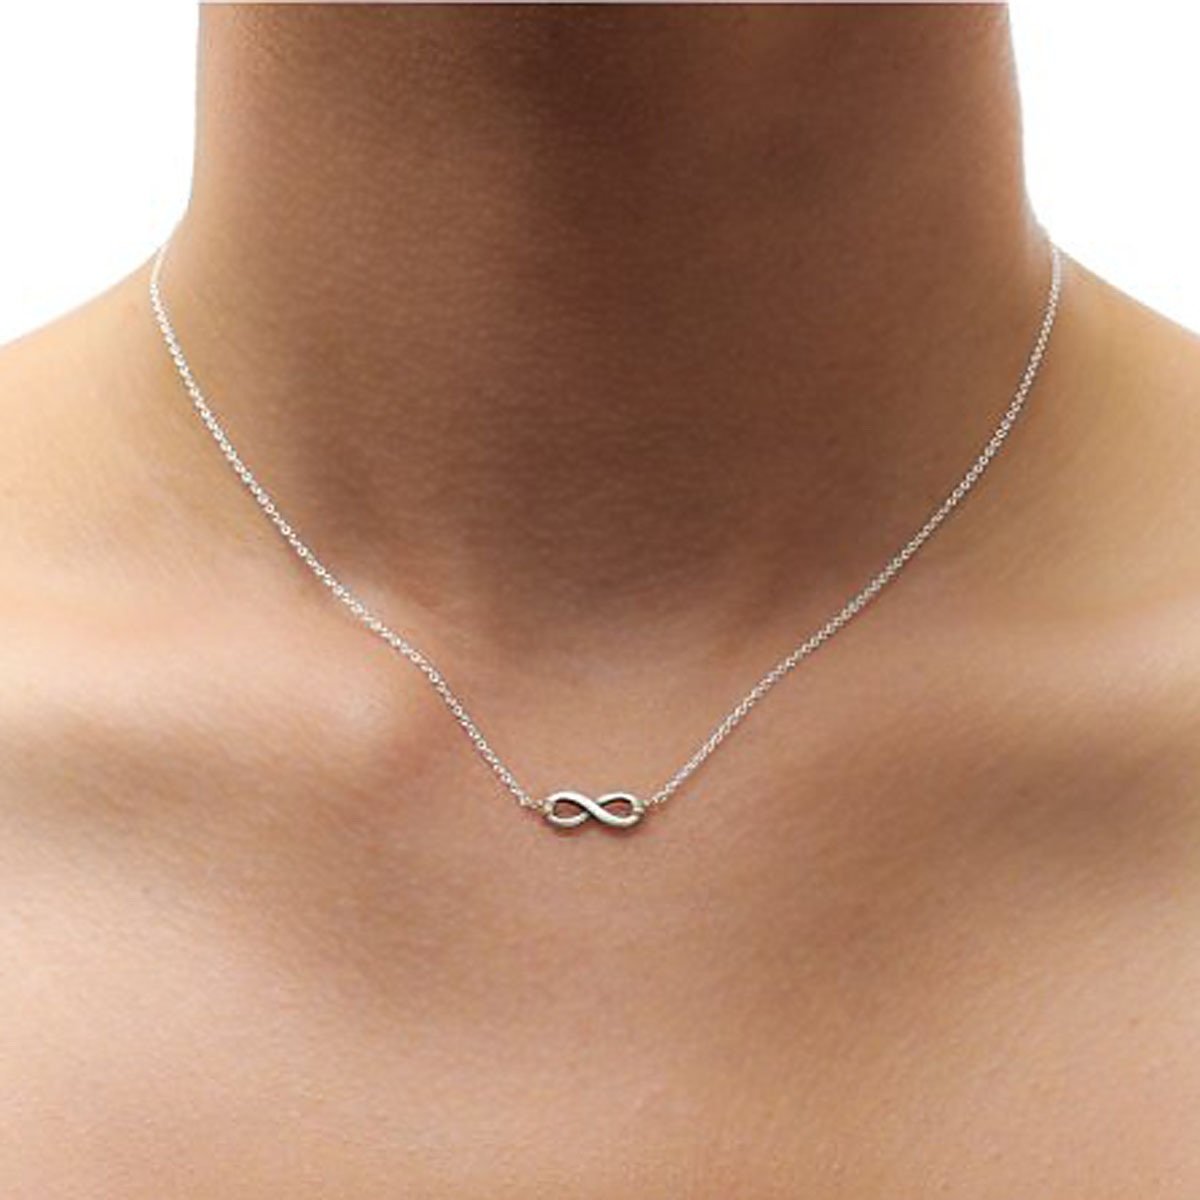 "Infinite Love" necklace